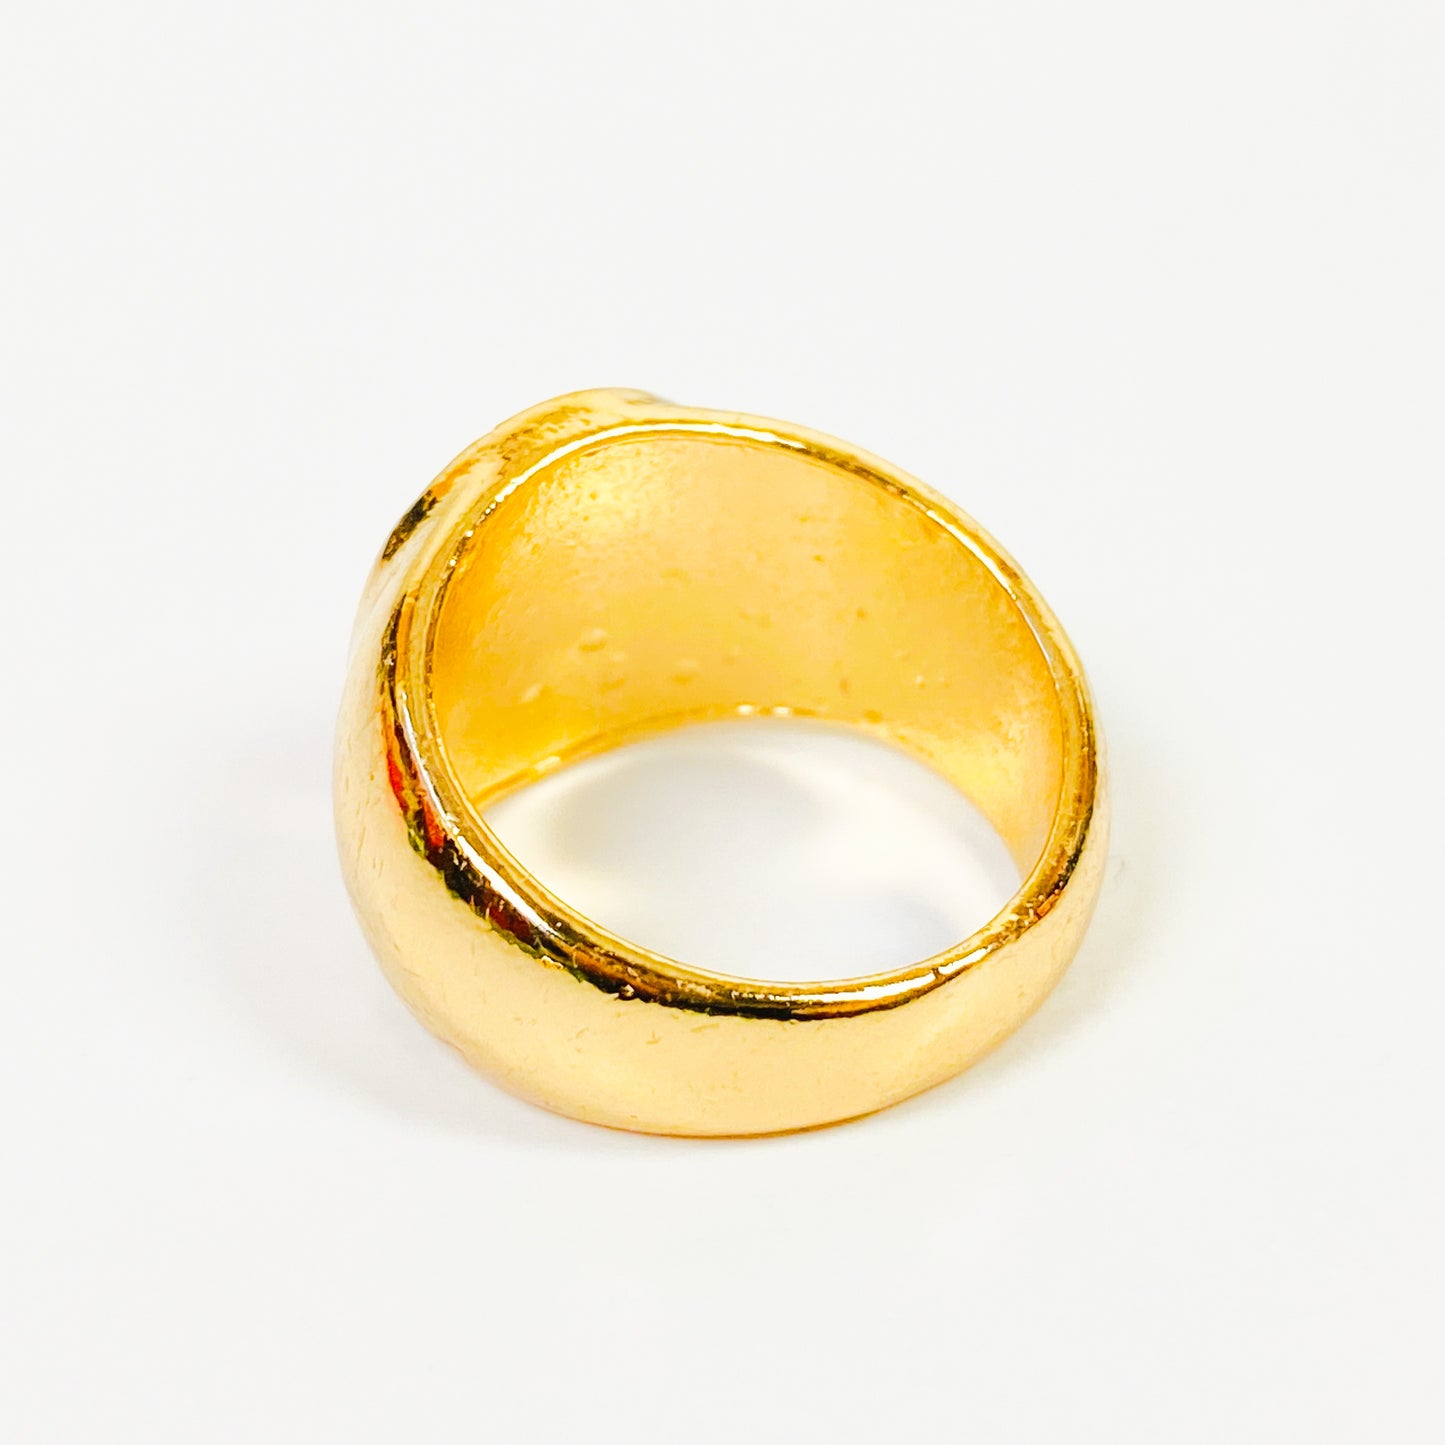 Retro Vintage Spade Ring Gold